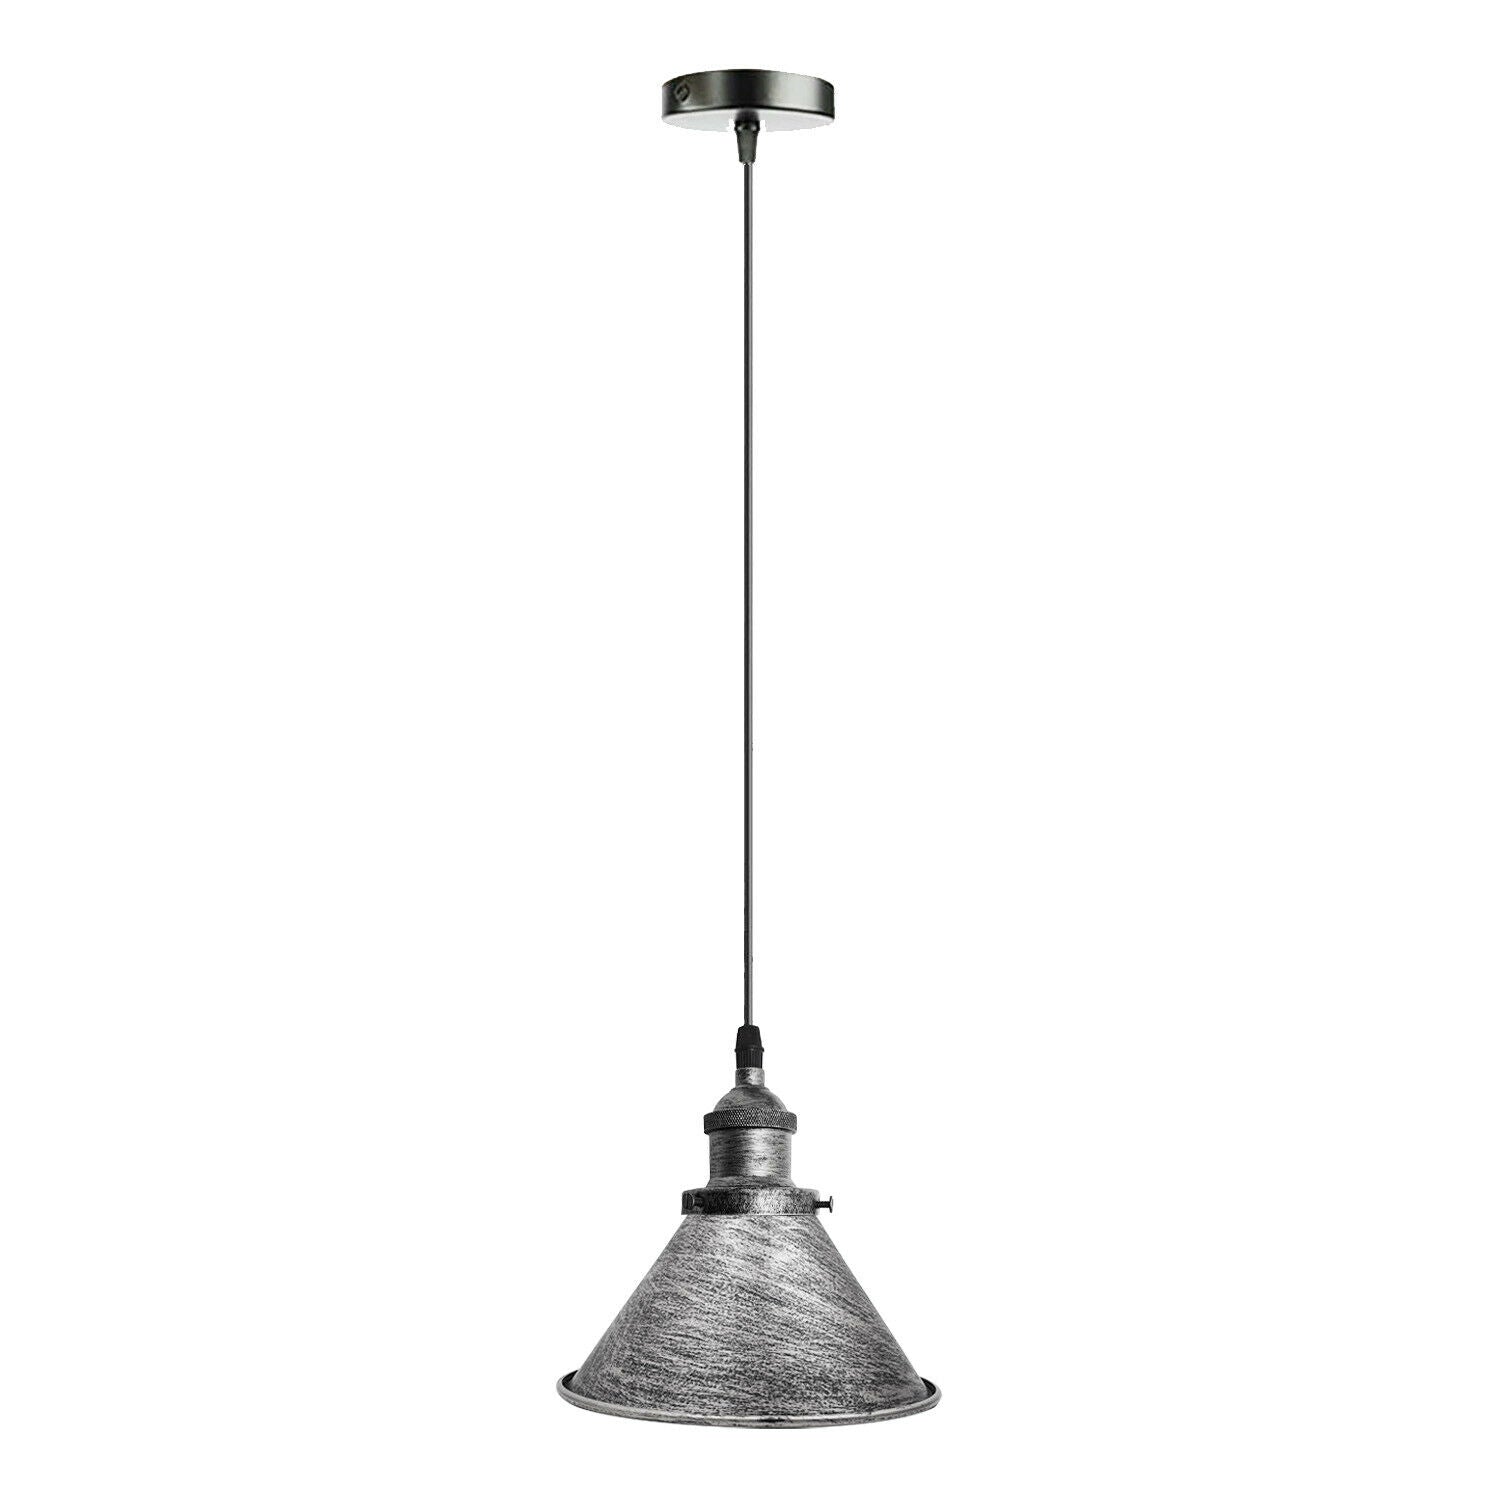 New Style Vintage Industrial Retro Loft Metal Ceiling E27 Lamp Shade Pendant Light~2204 - LEDSone UK Ltd